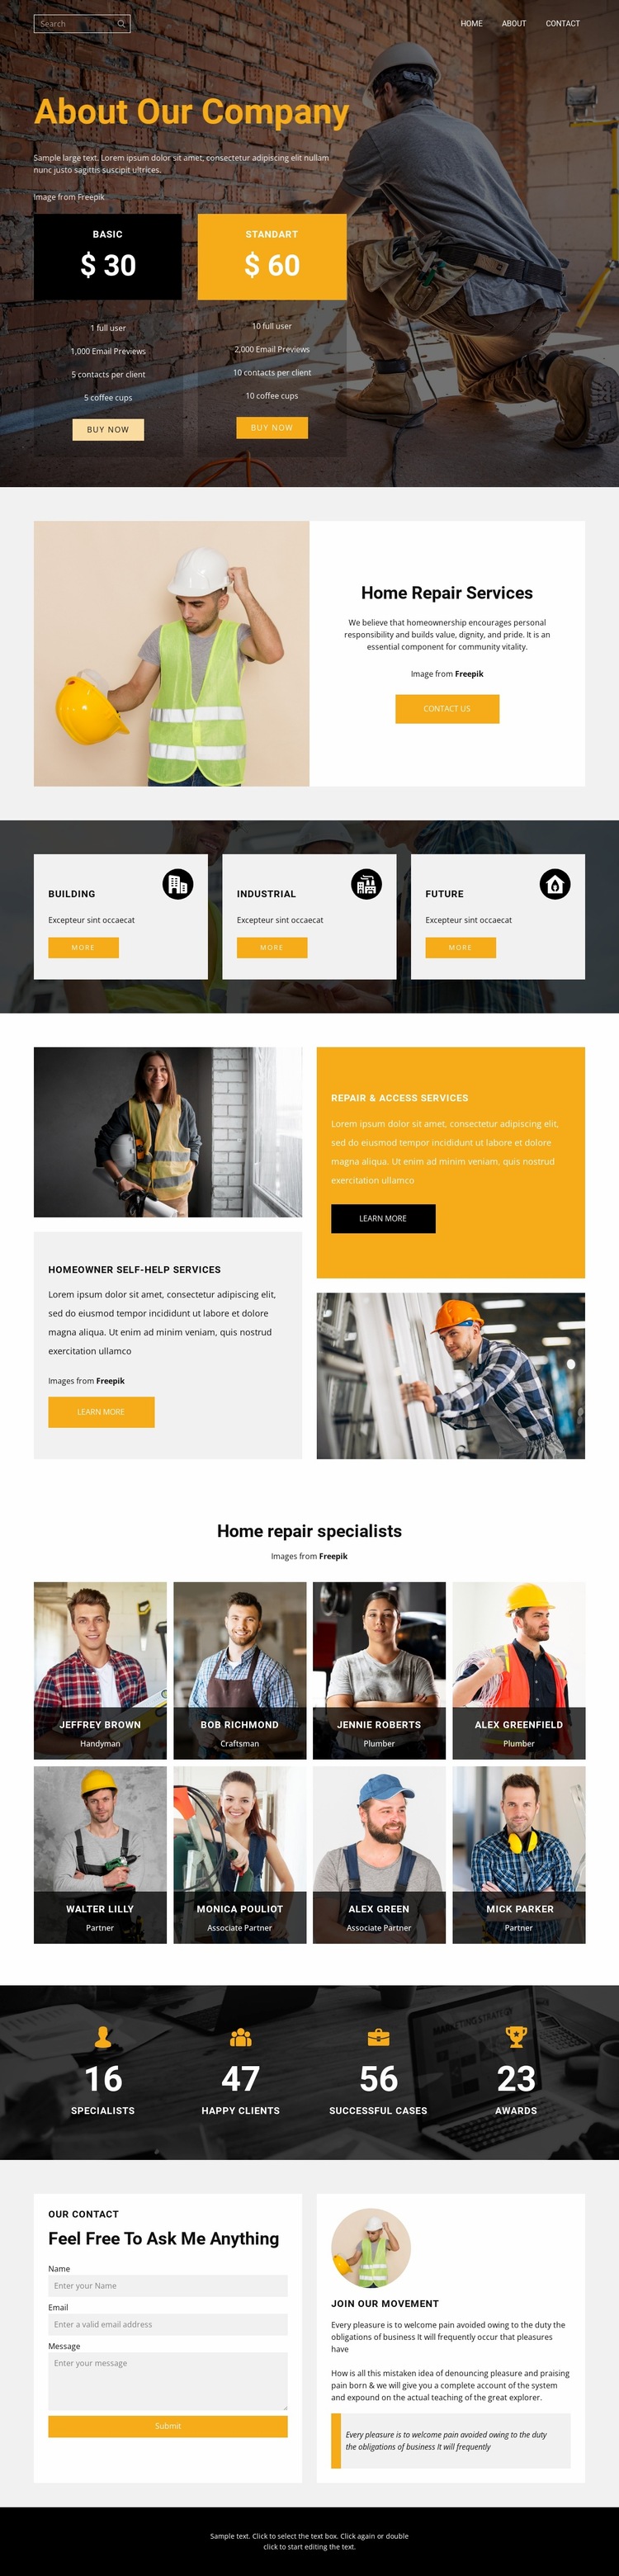 We will build a better home Website Builder Templates